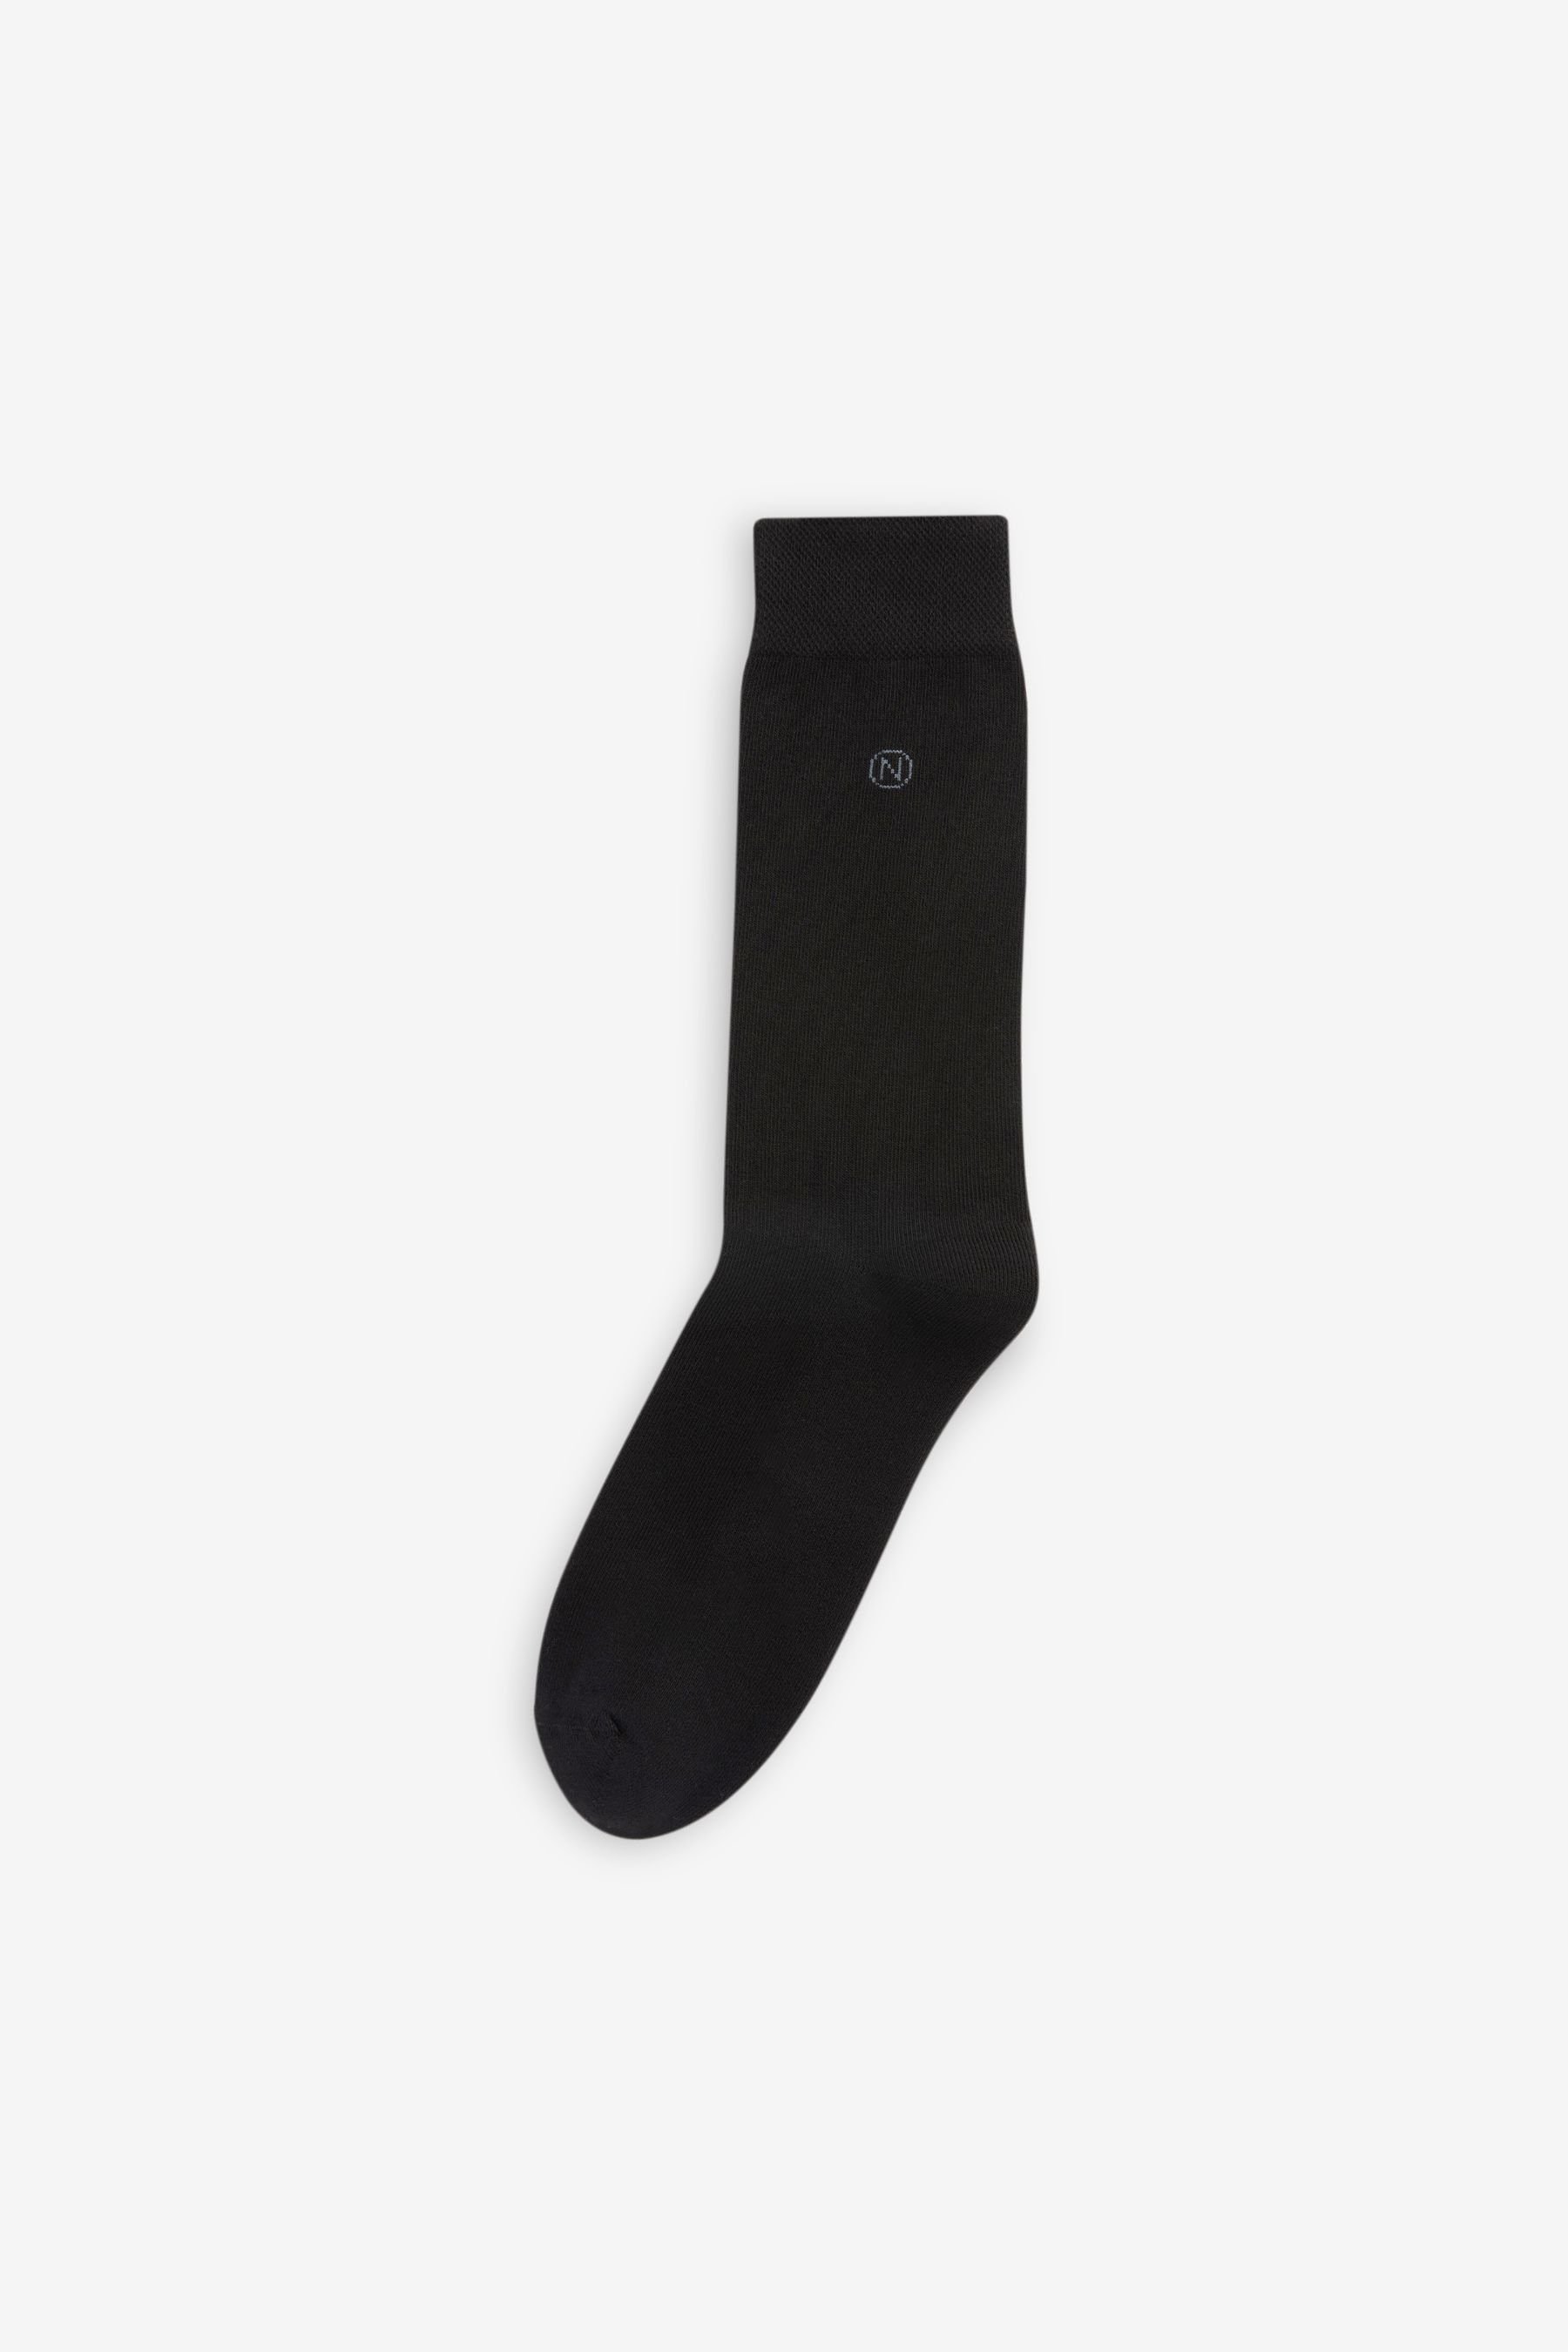 Sohle Black Next 5er-Pack Kurzsocken Socken (5-Paar) mit gepolsterter